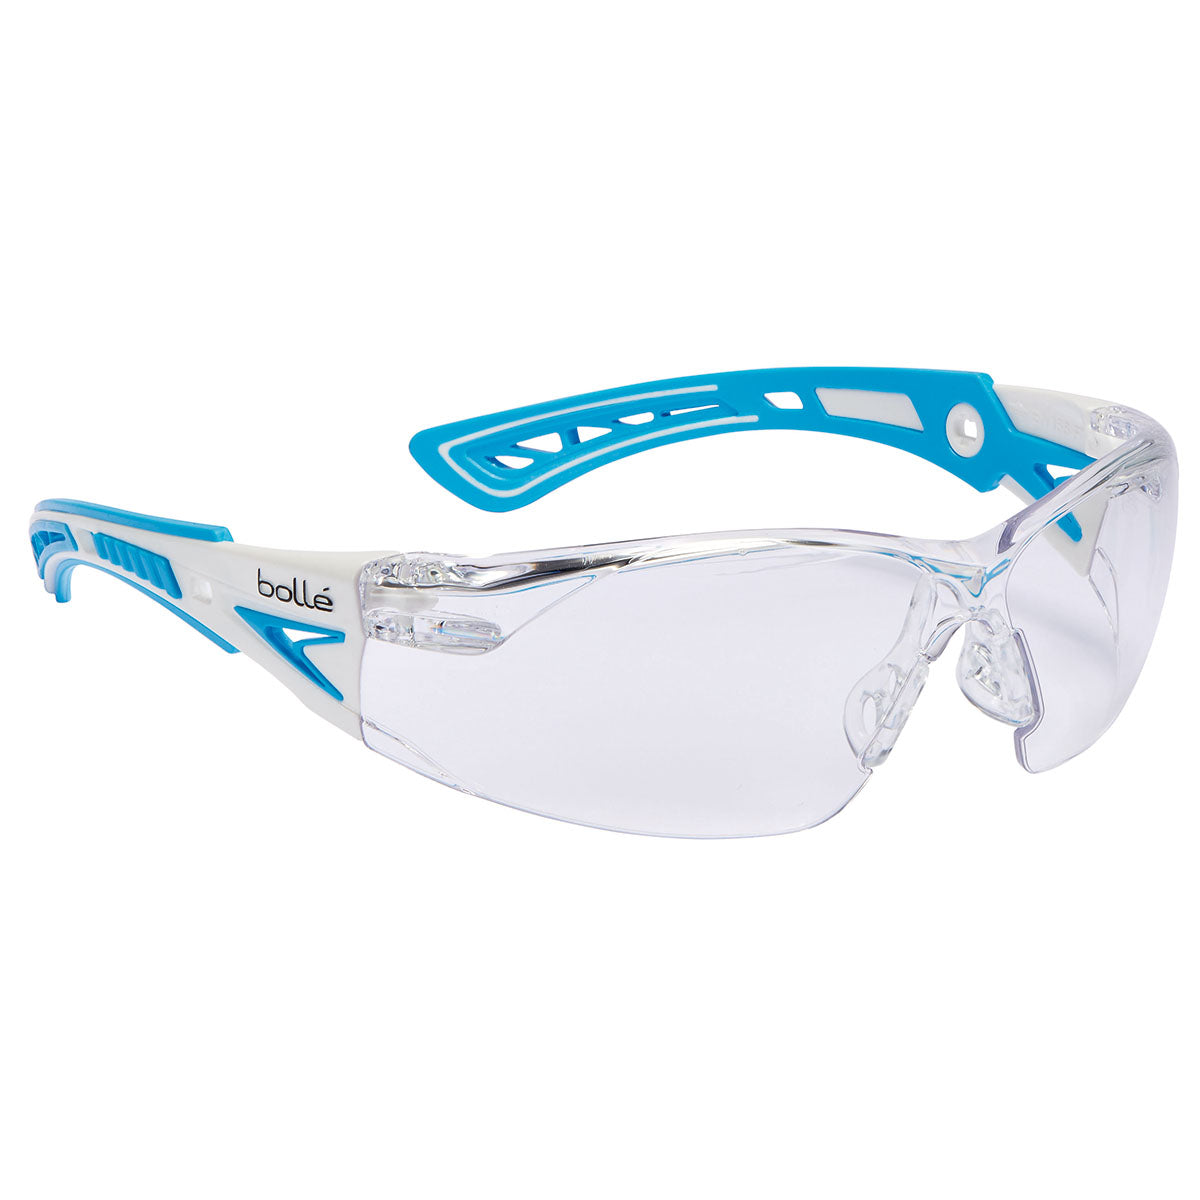 Bollé Rush+ PSSRUSP085 Clear Medical Safety Glasses